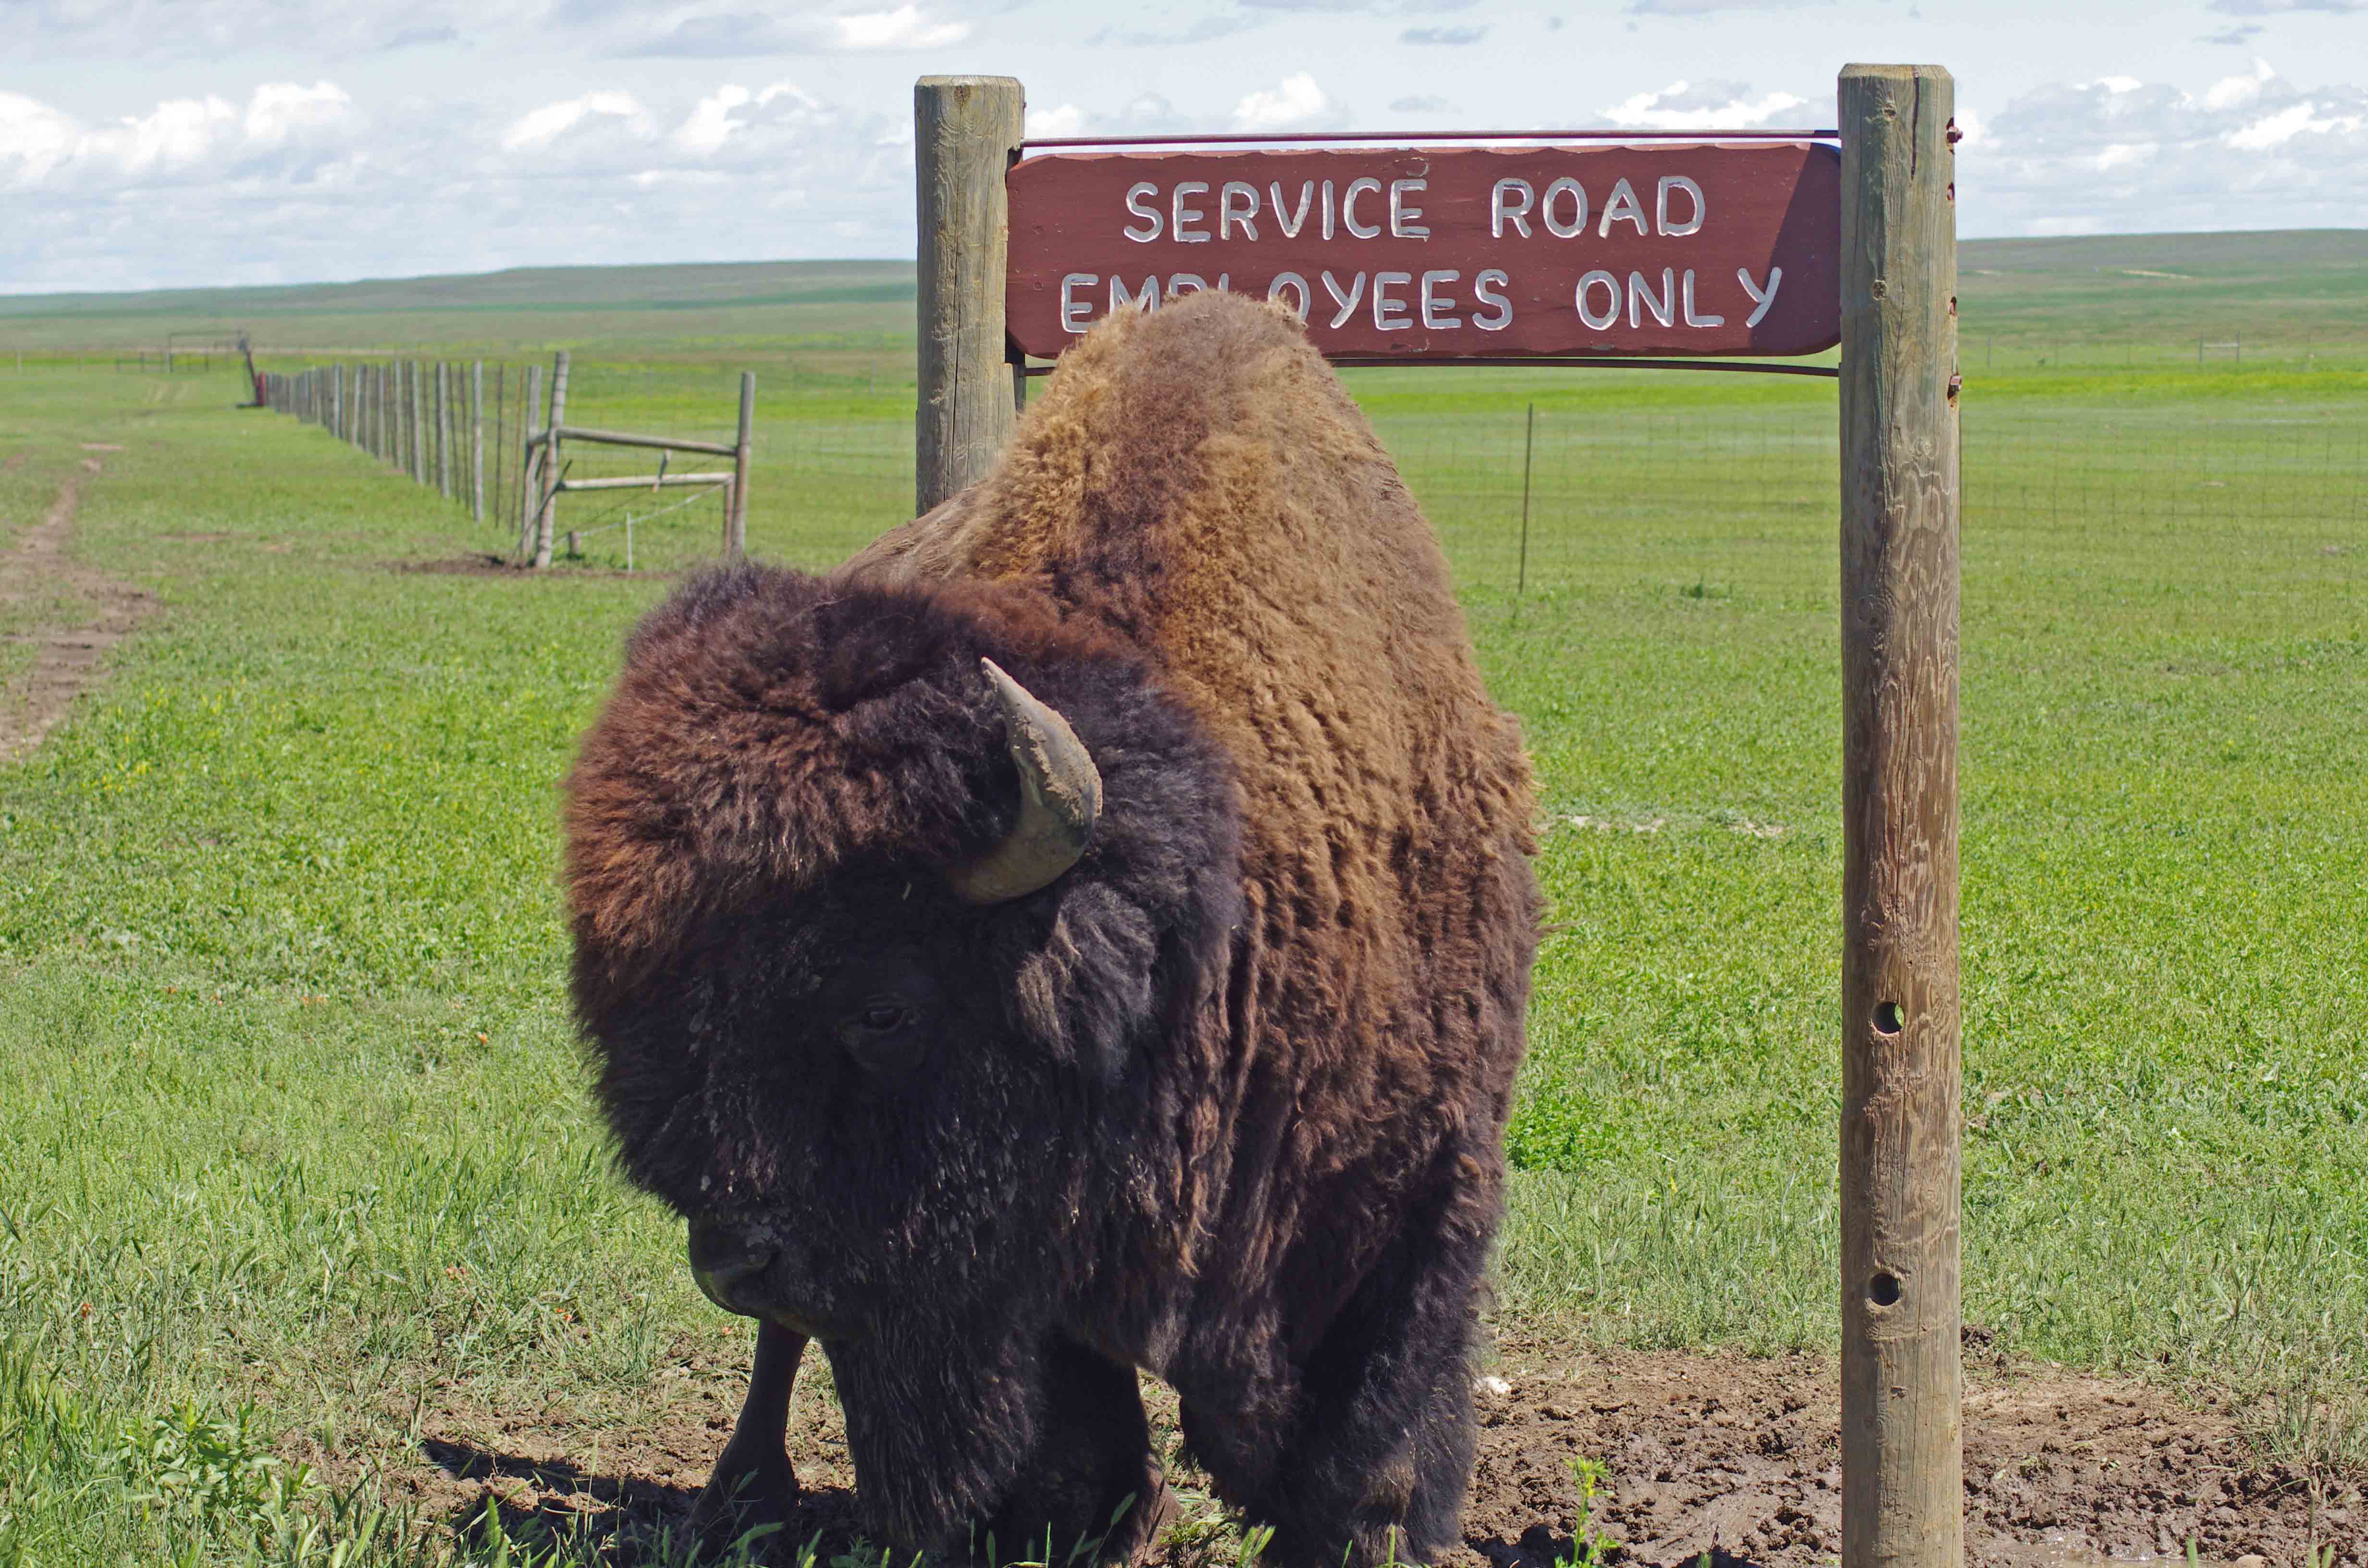 Bison, Buffalo, Tatanka: Bovids of the Badlands (. National Park Service)